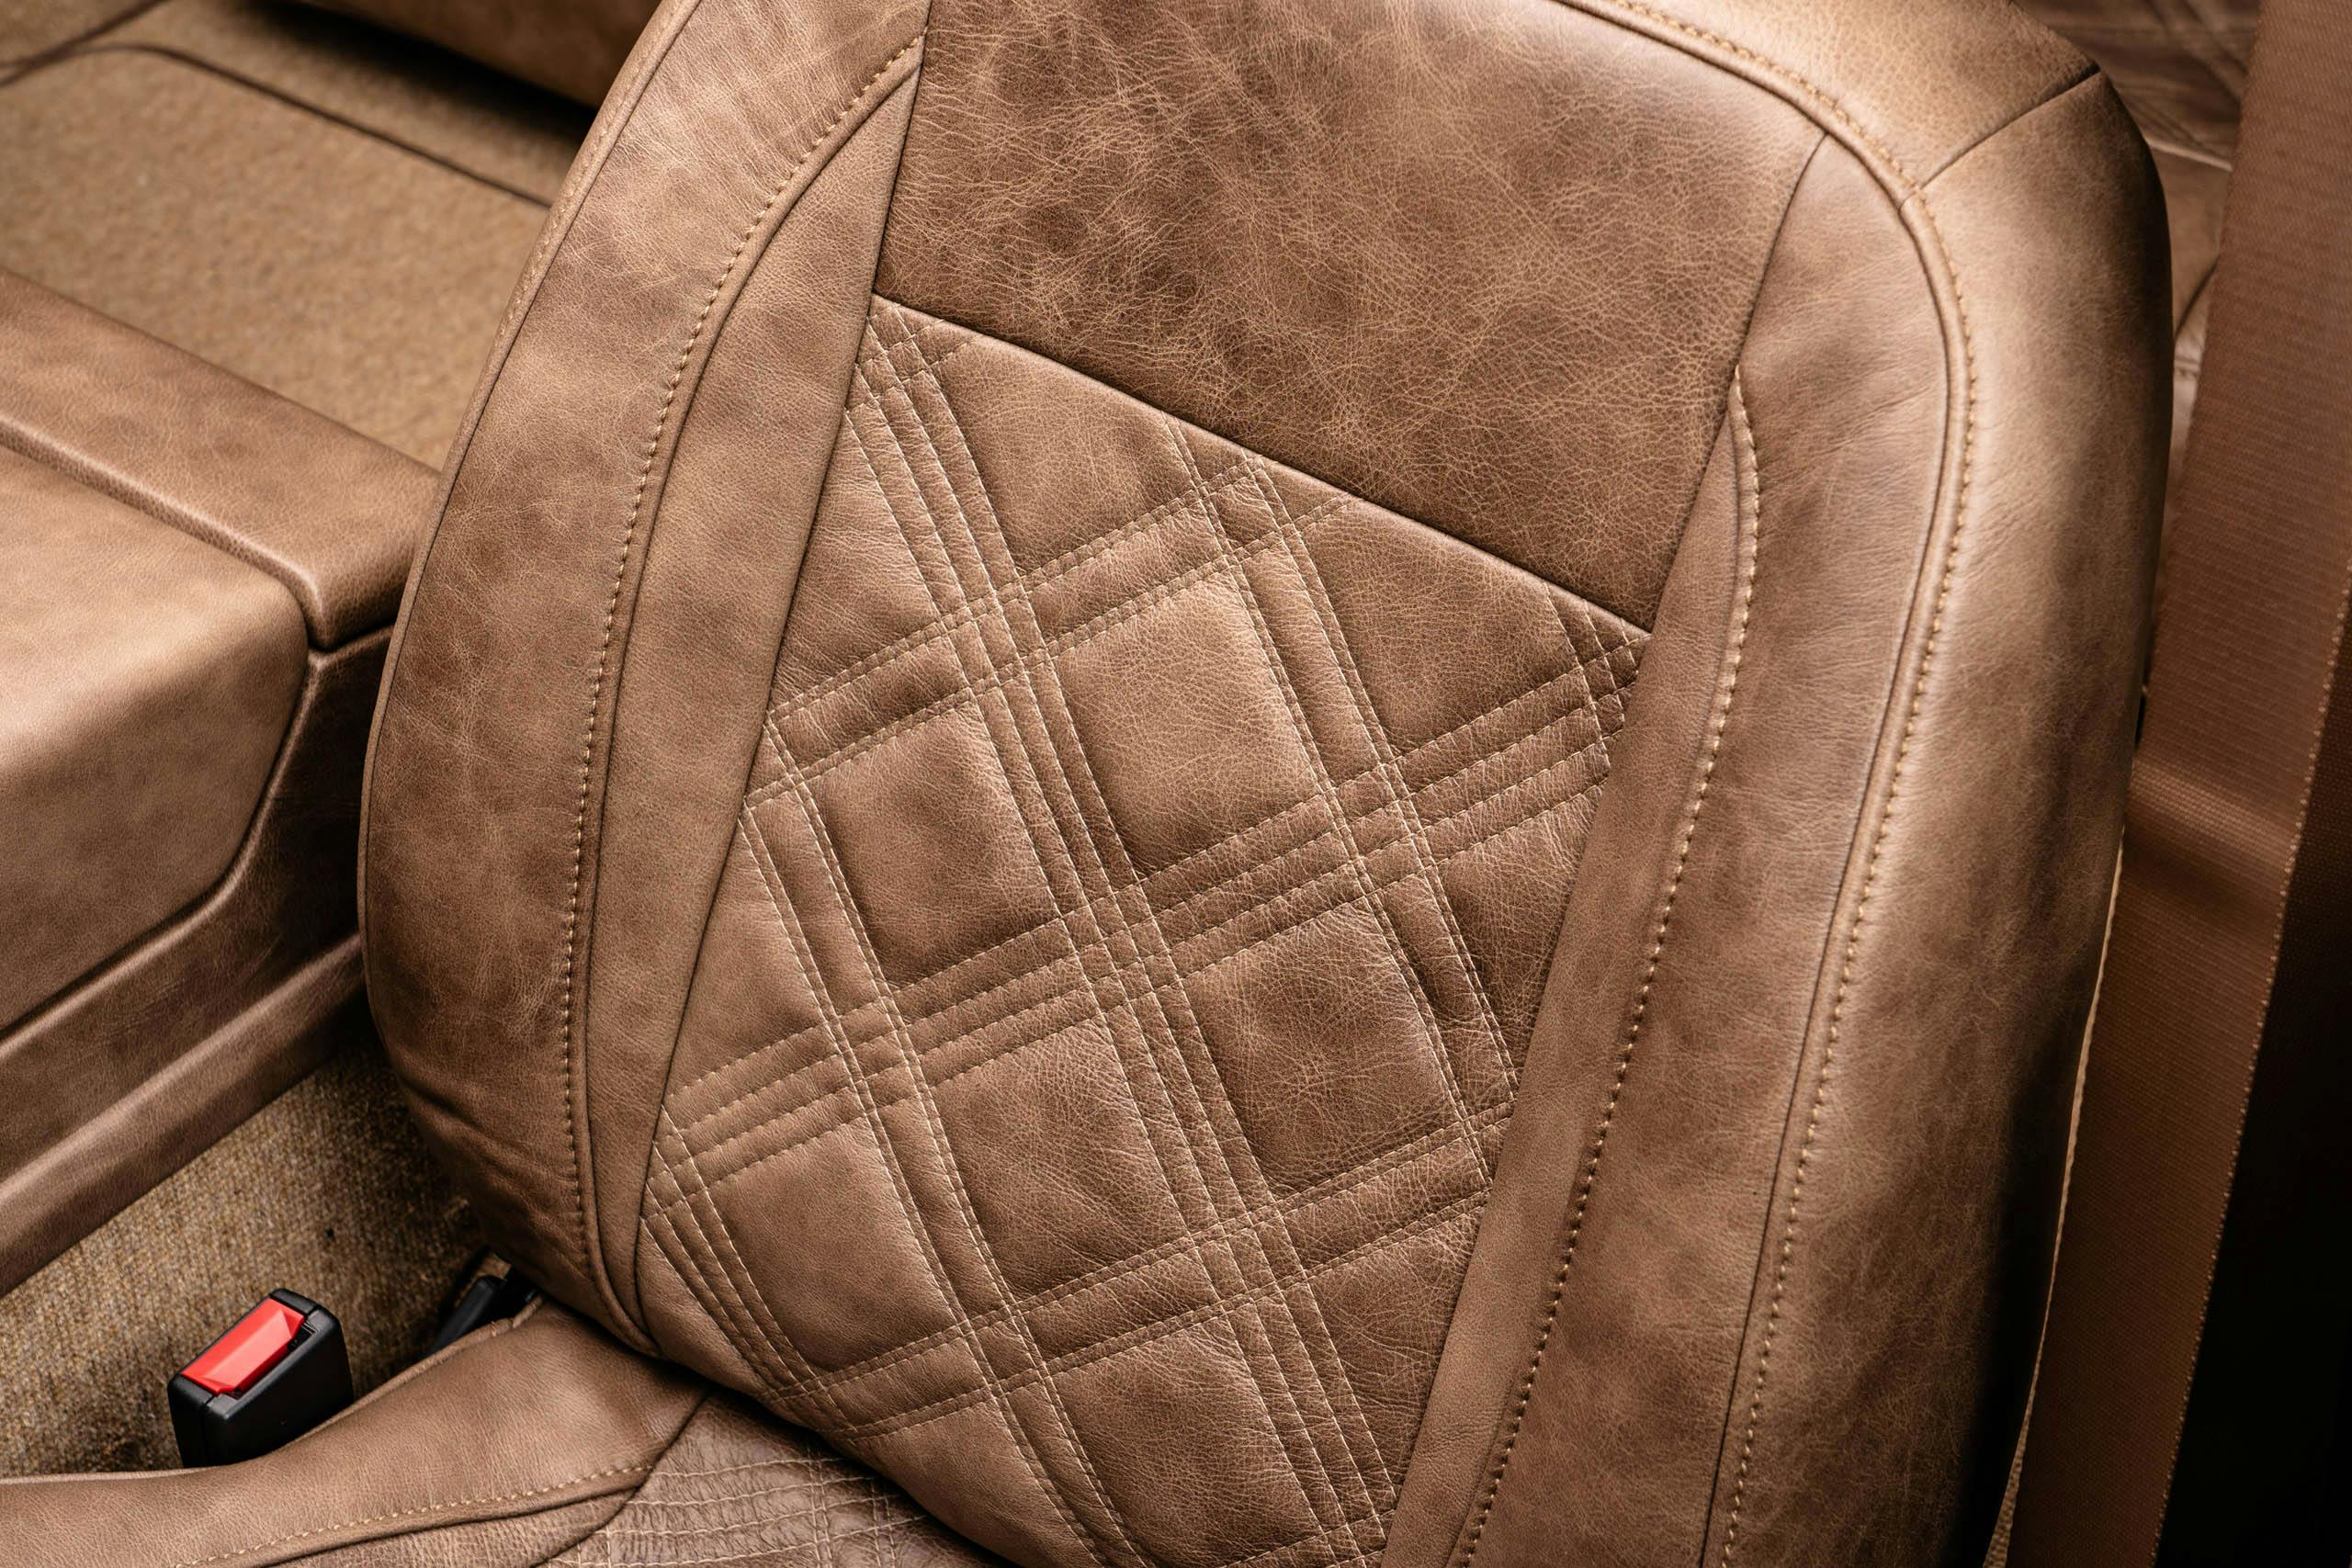 Velocity Modern Classics K5 Chevy Blazer restomod interior seat quilting detail